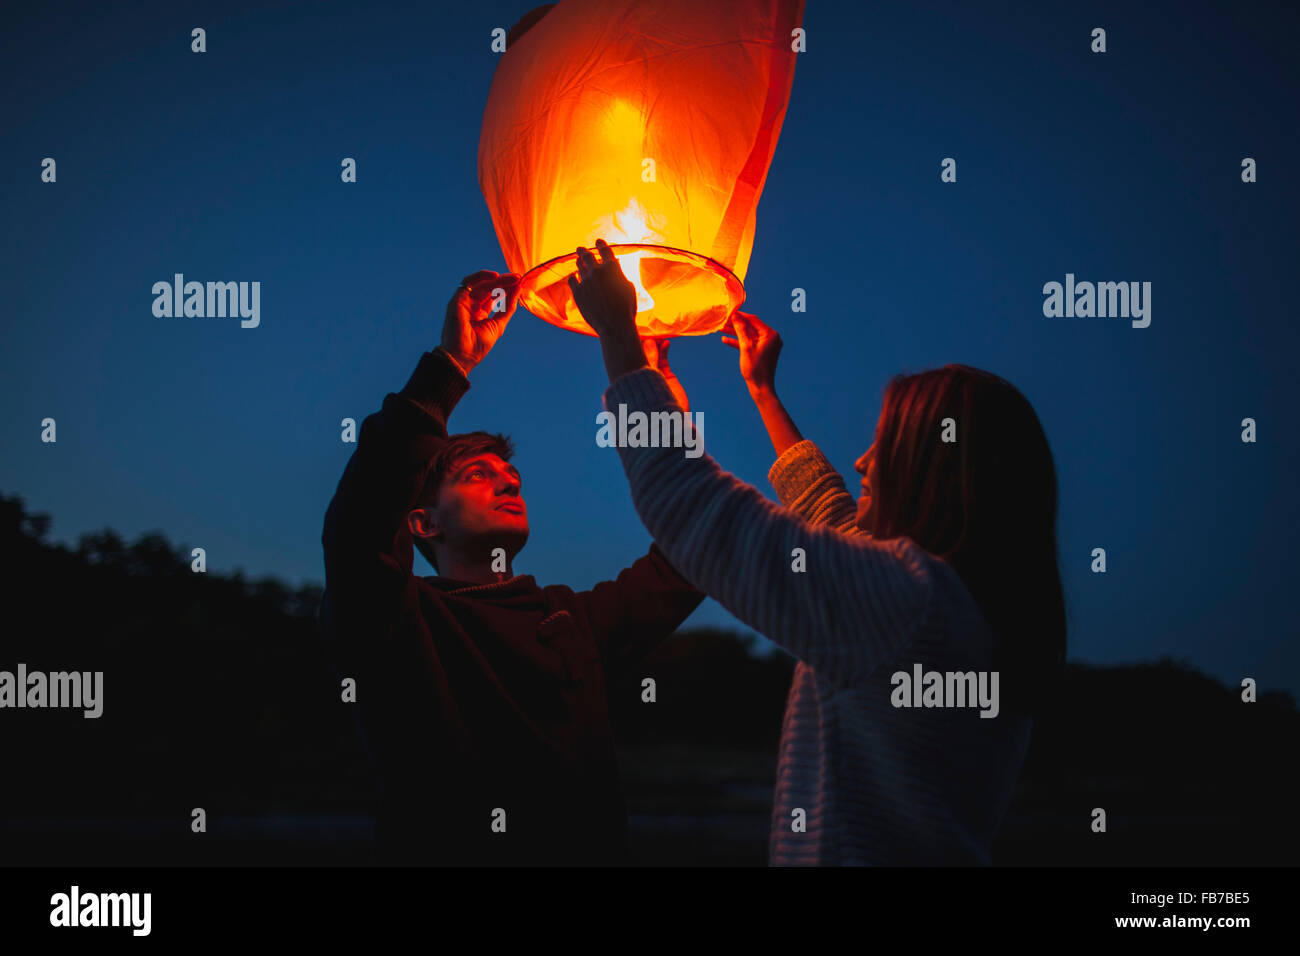 Surrey residents urged to boycott 'exceptionally dangerous' sky lantern  idea to thank NHS - Surrey Live